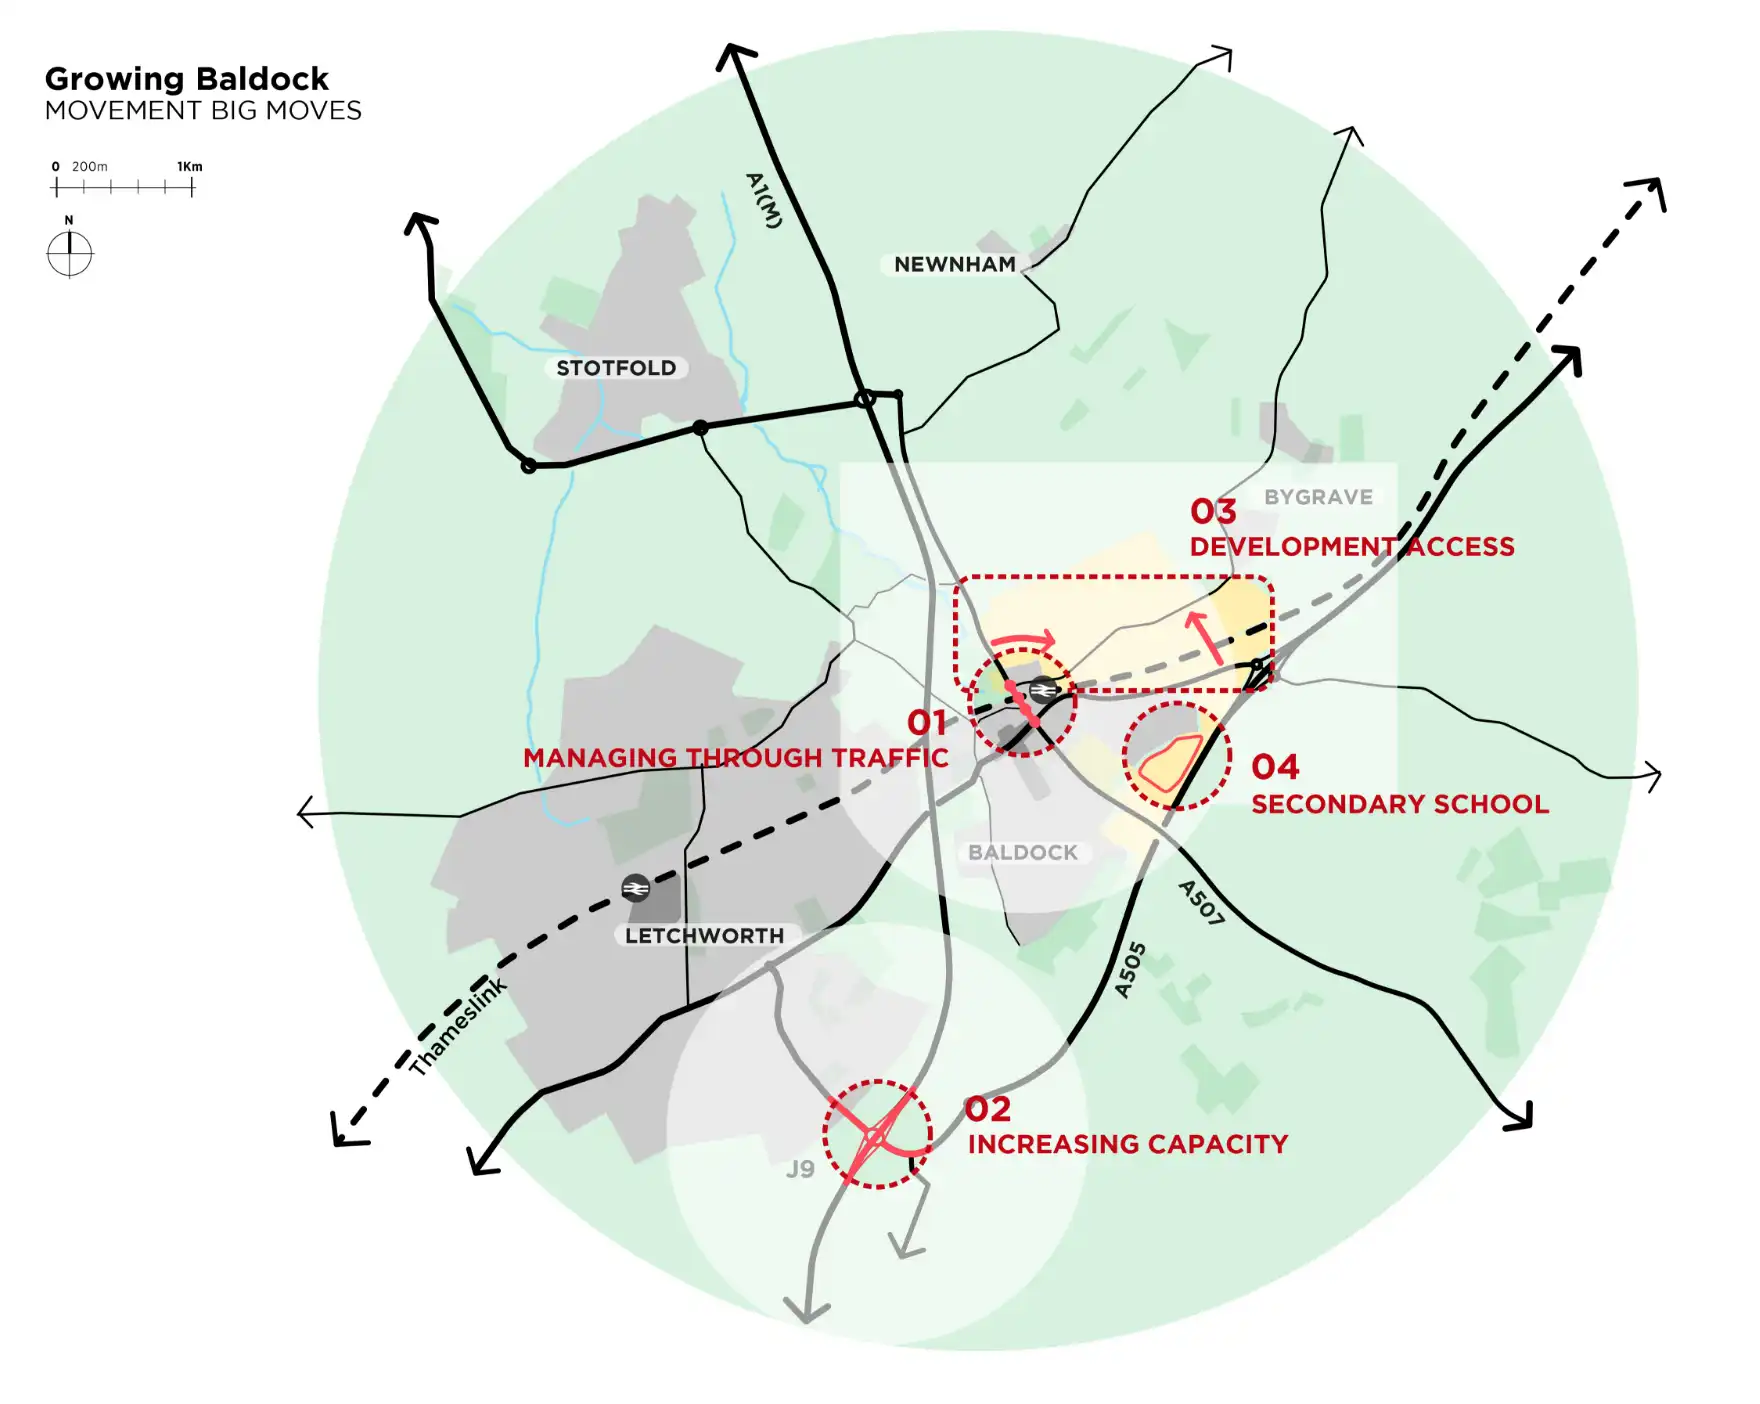 Map of Baldock showing transport plans